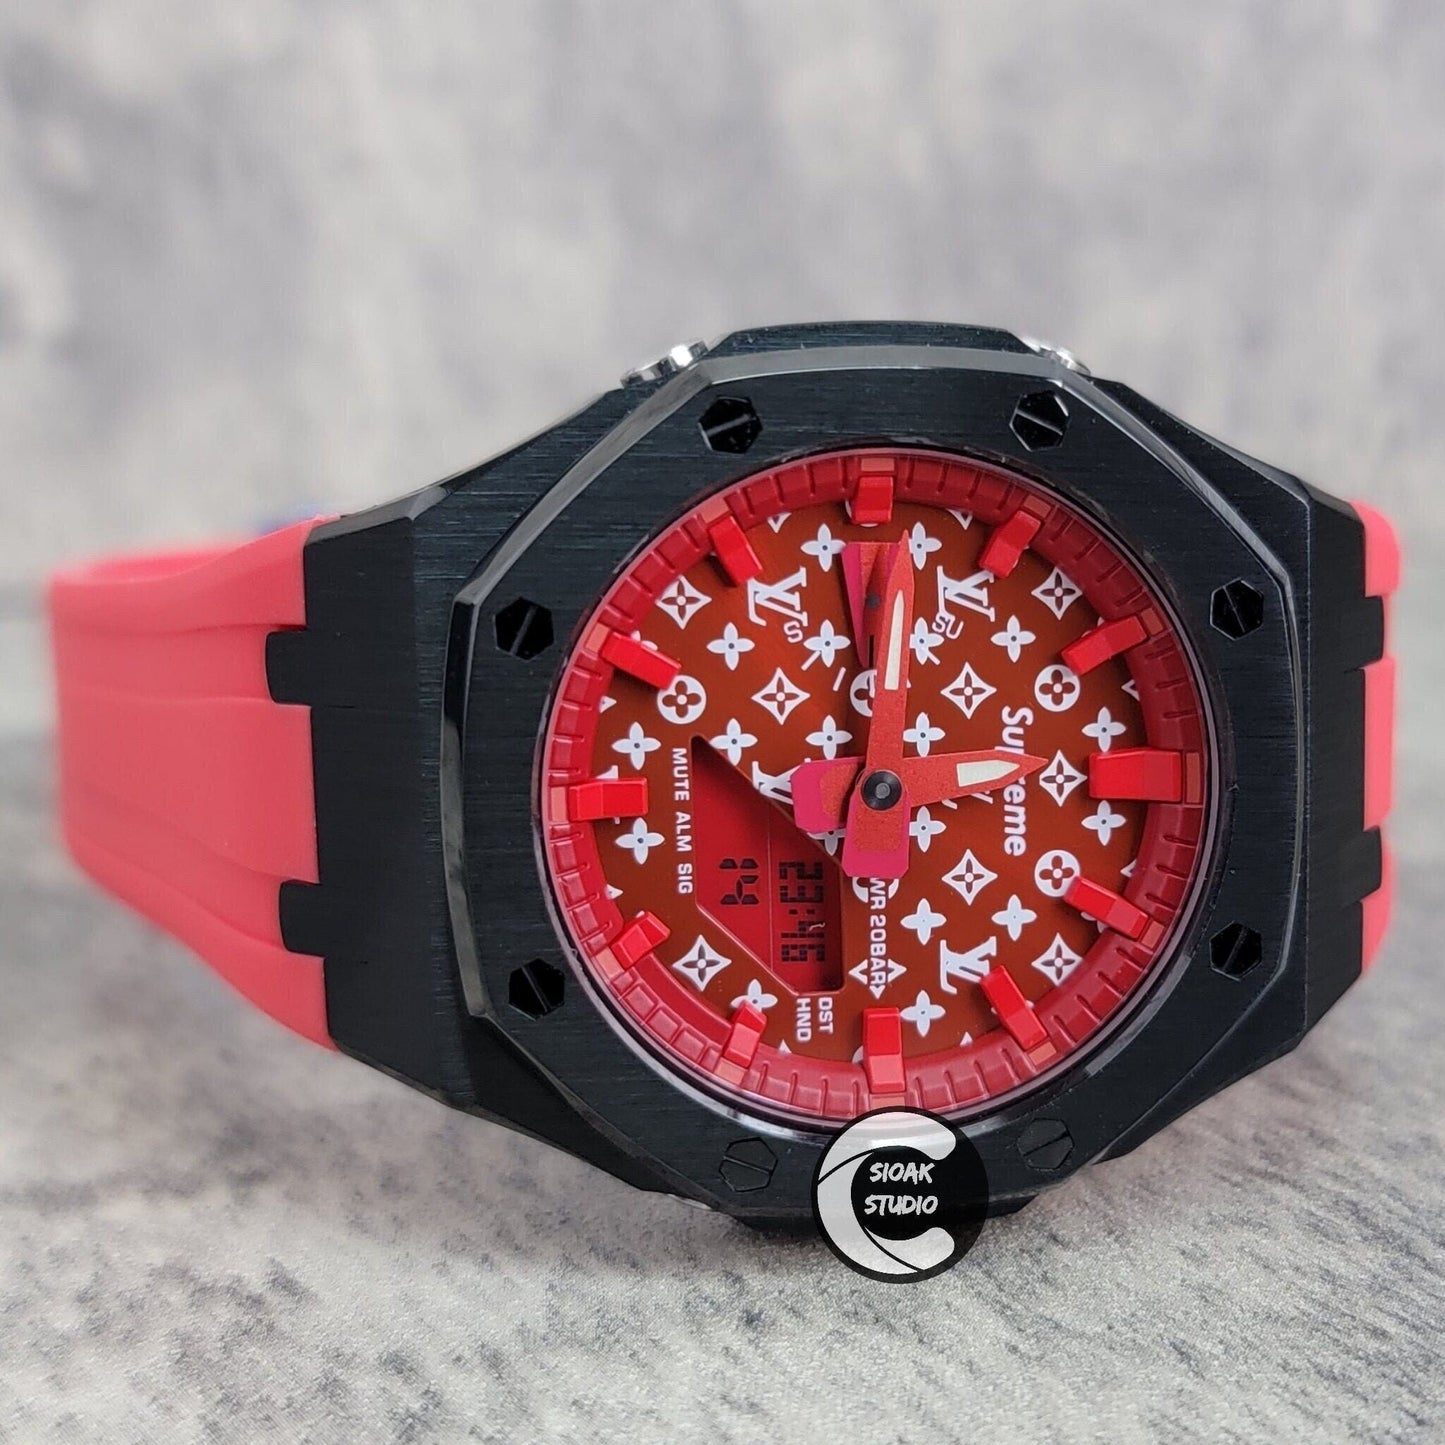 Casioak Mod Watch Black Case Red Rubber Strap Red Time Mark Red Dial 44mm - Casioak Studio